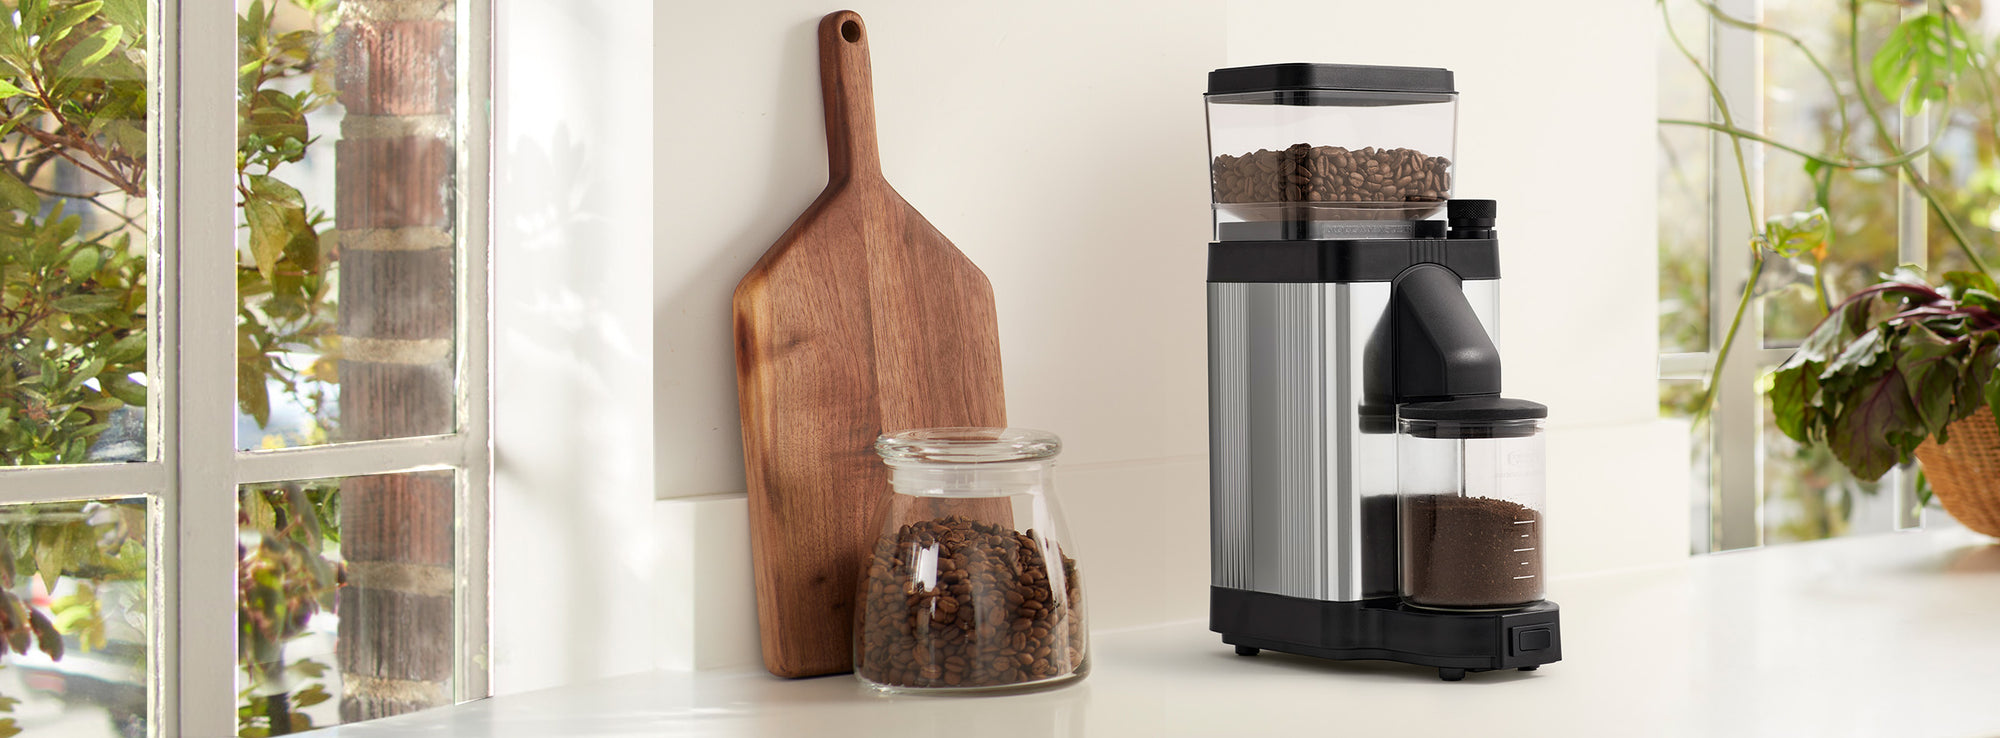 Moccamaster coffee grinder in kitchen